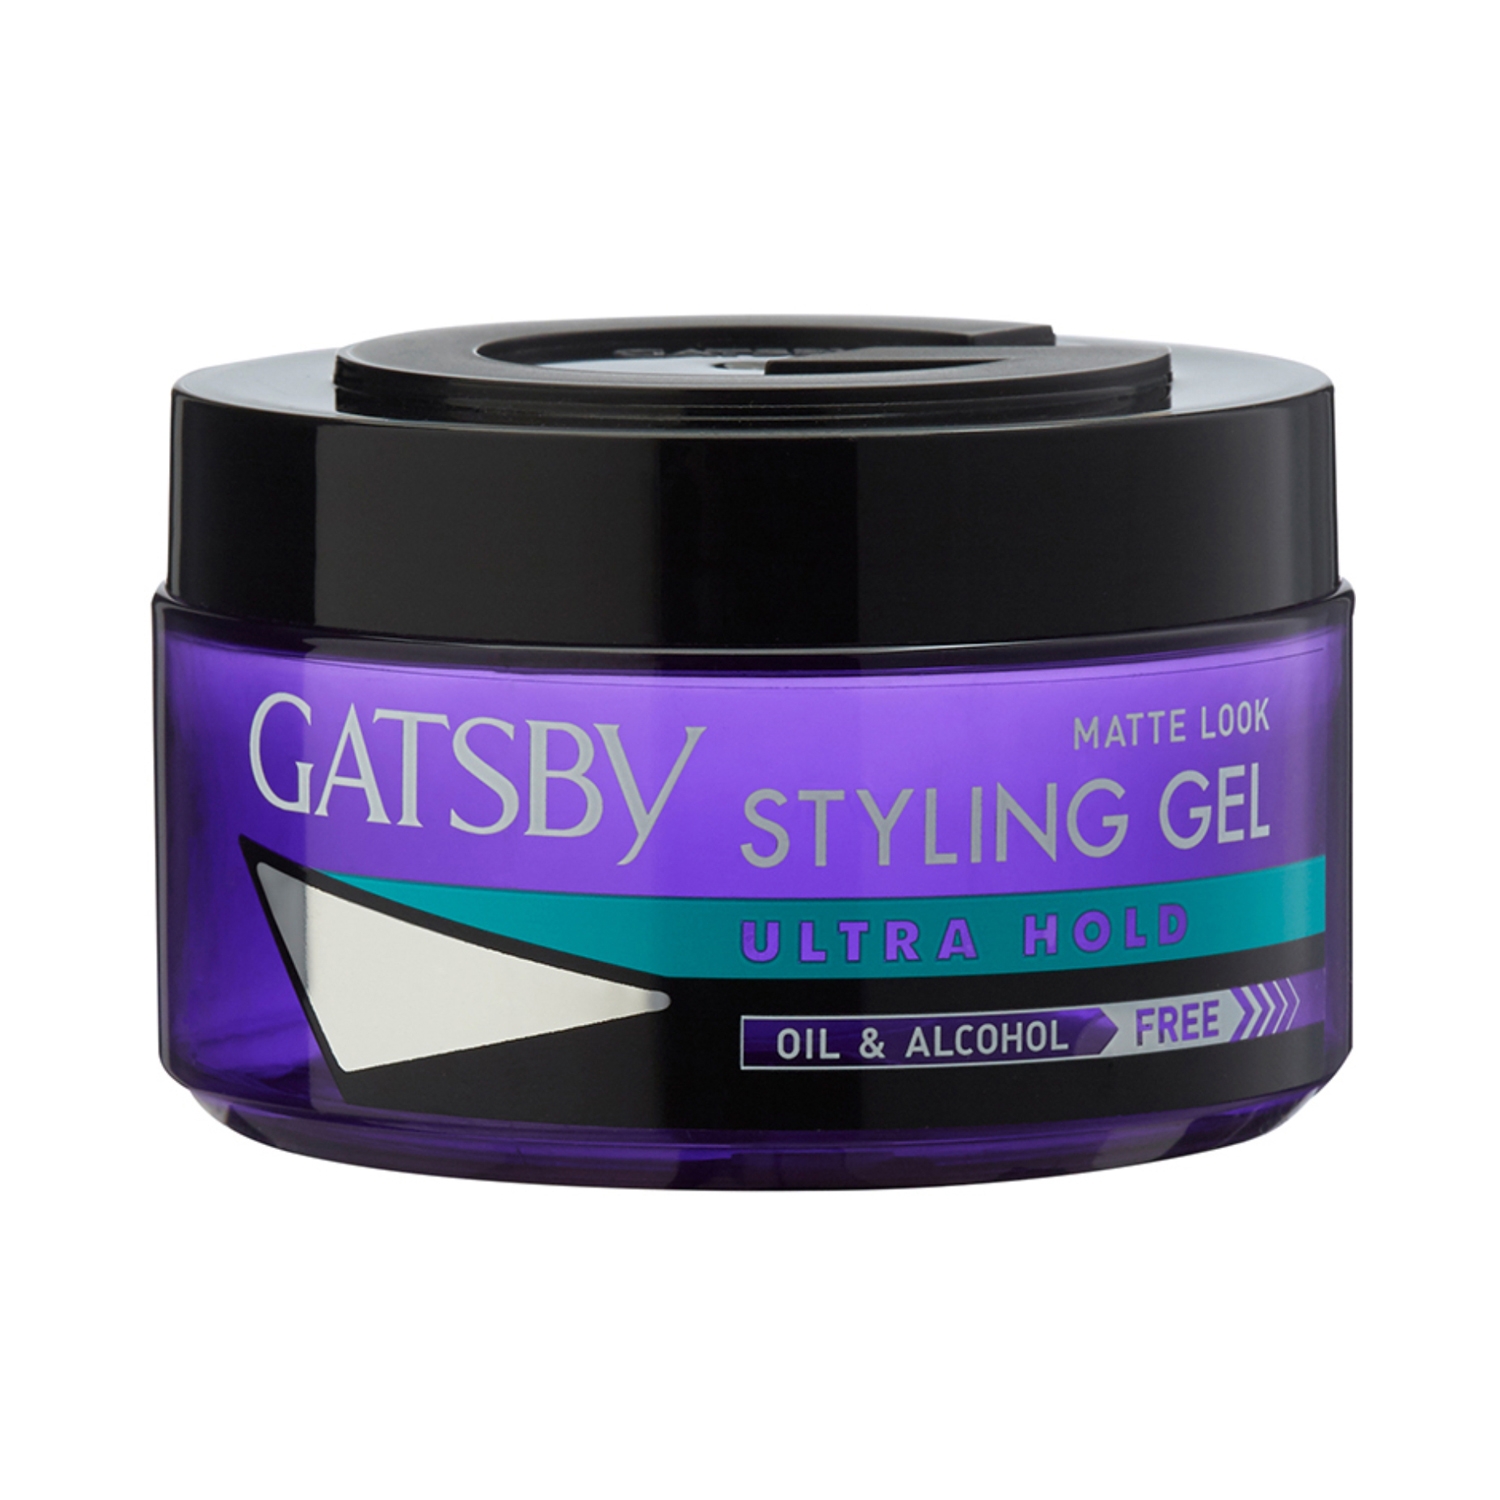 Gatsby Styling Gel Ultra Hold Gel (150g)